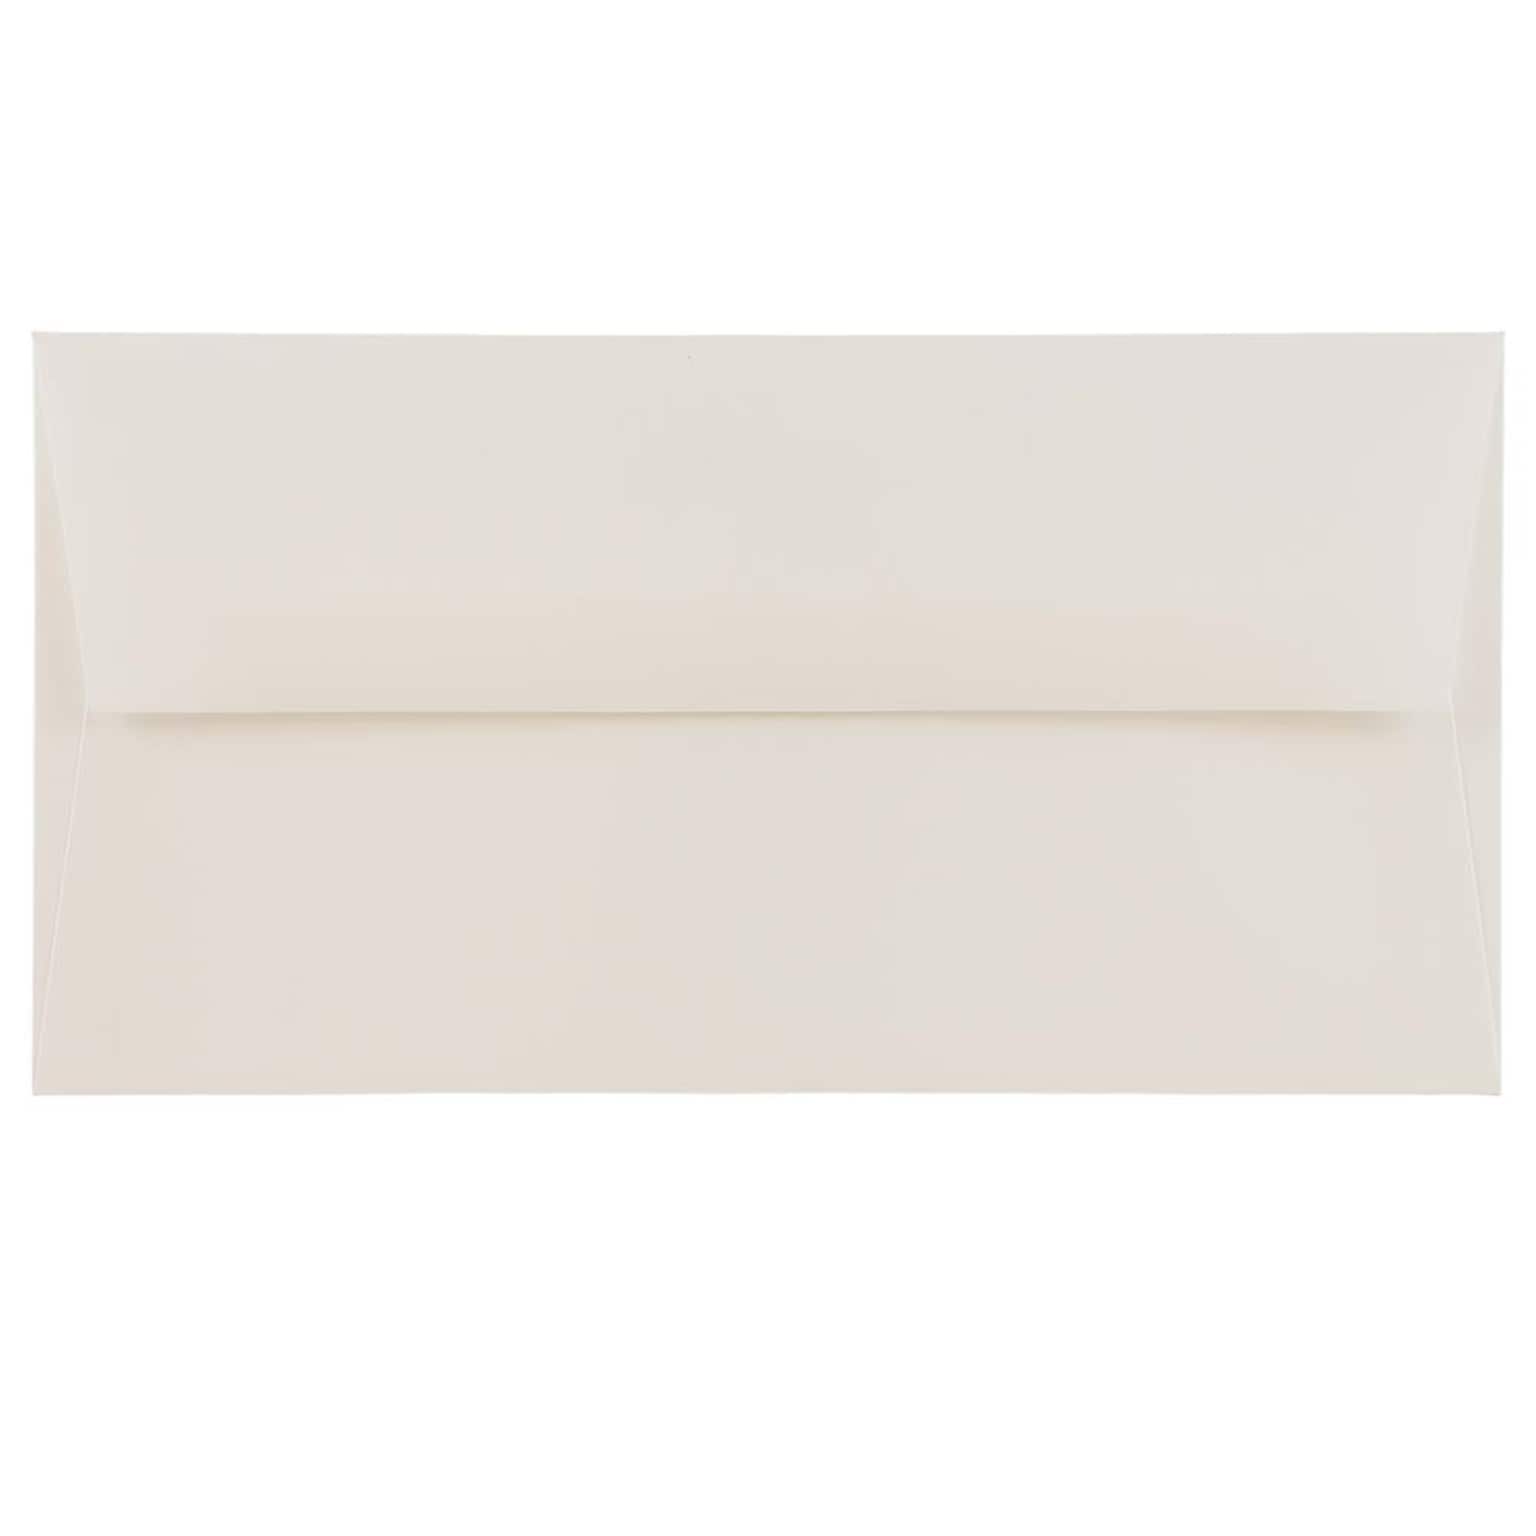 JAM Paper Monarch Strathmore Invitation Envelopes, 3.875 x 7.5, Bright White Wove, Bulk 1000/Carton (0196556B)